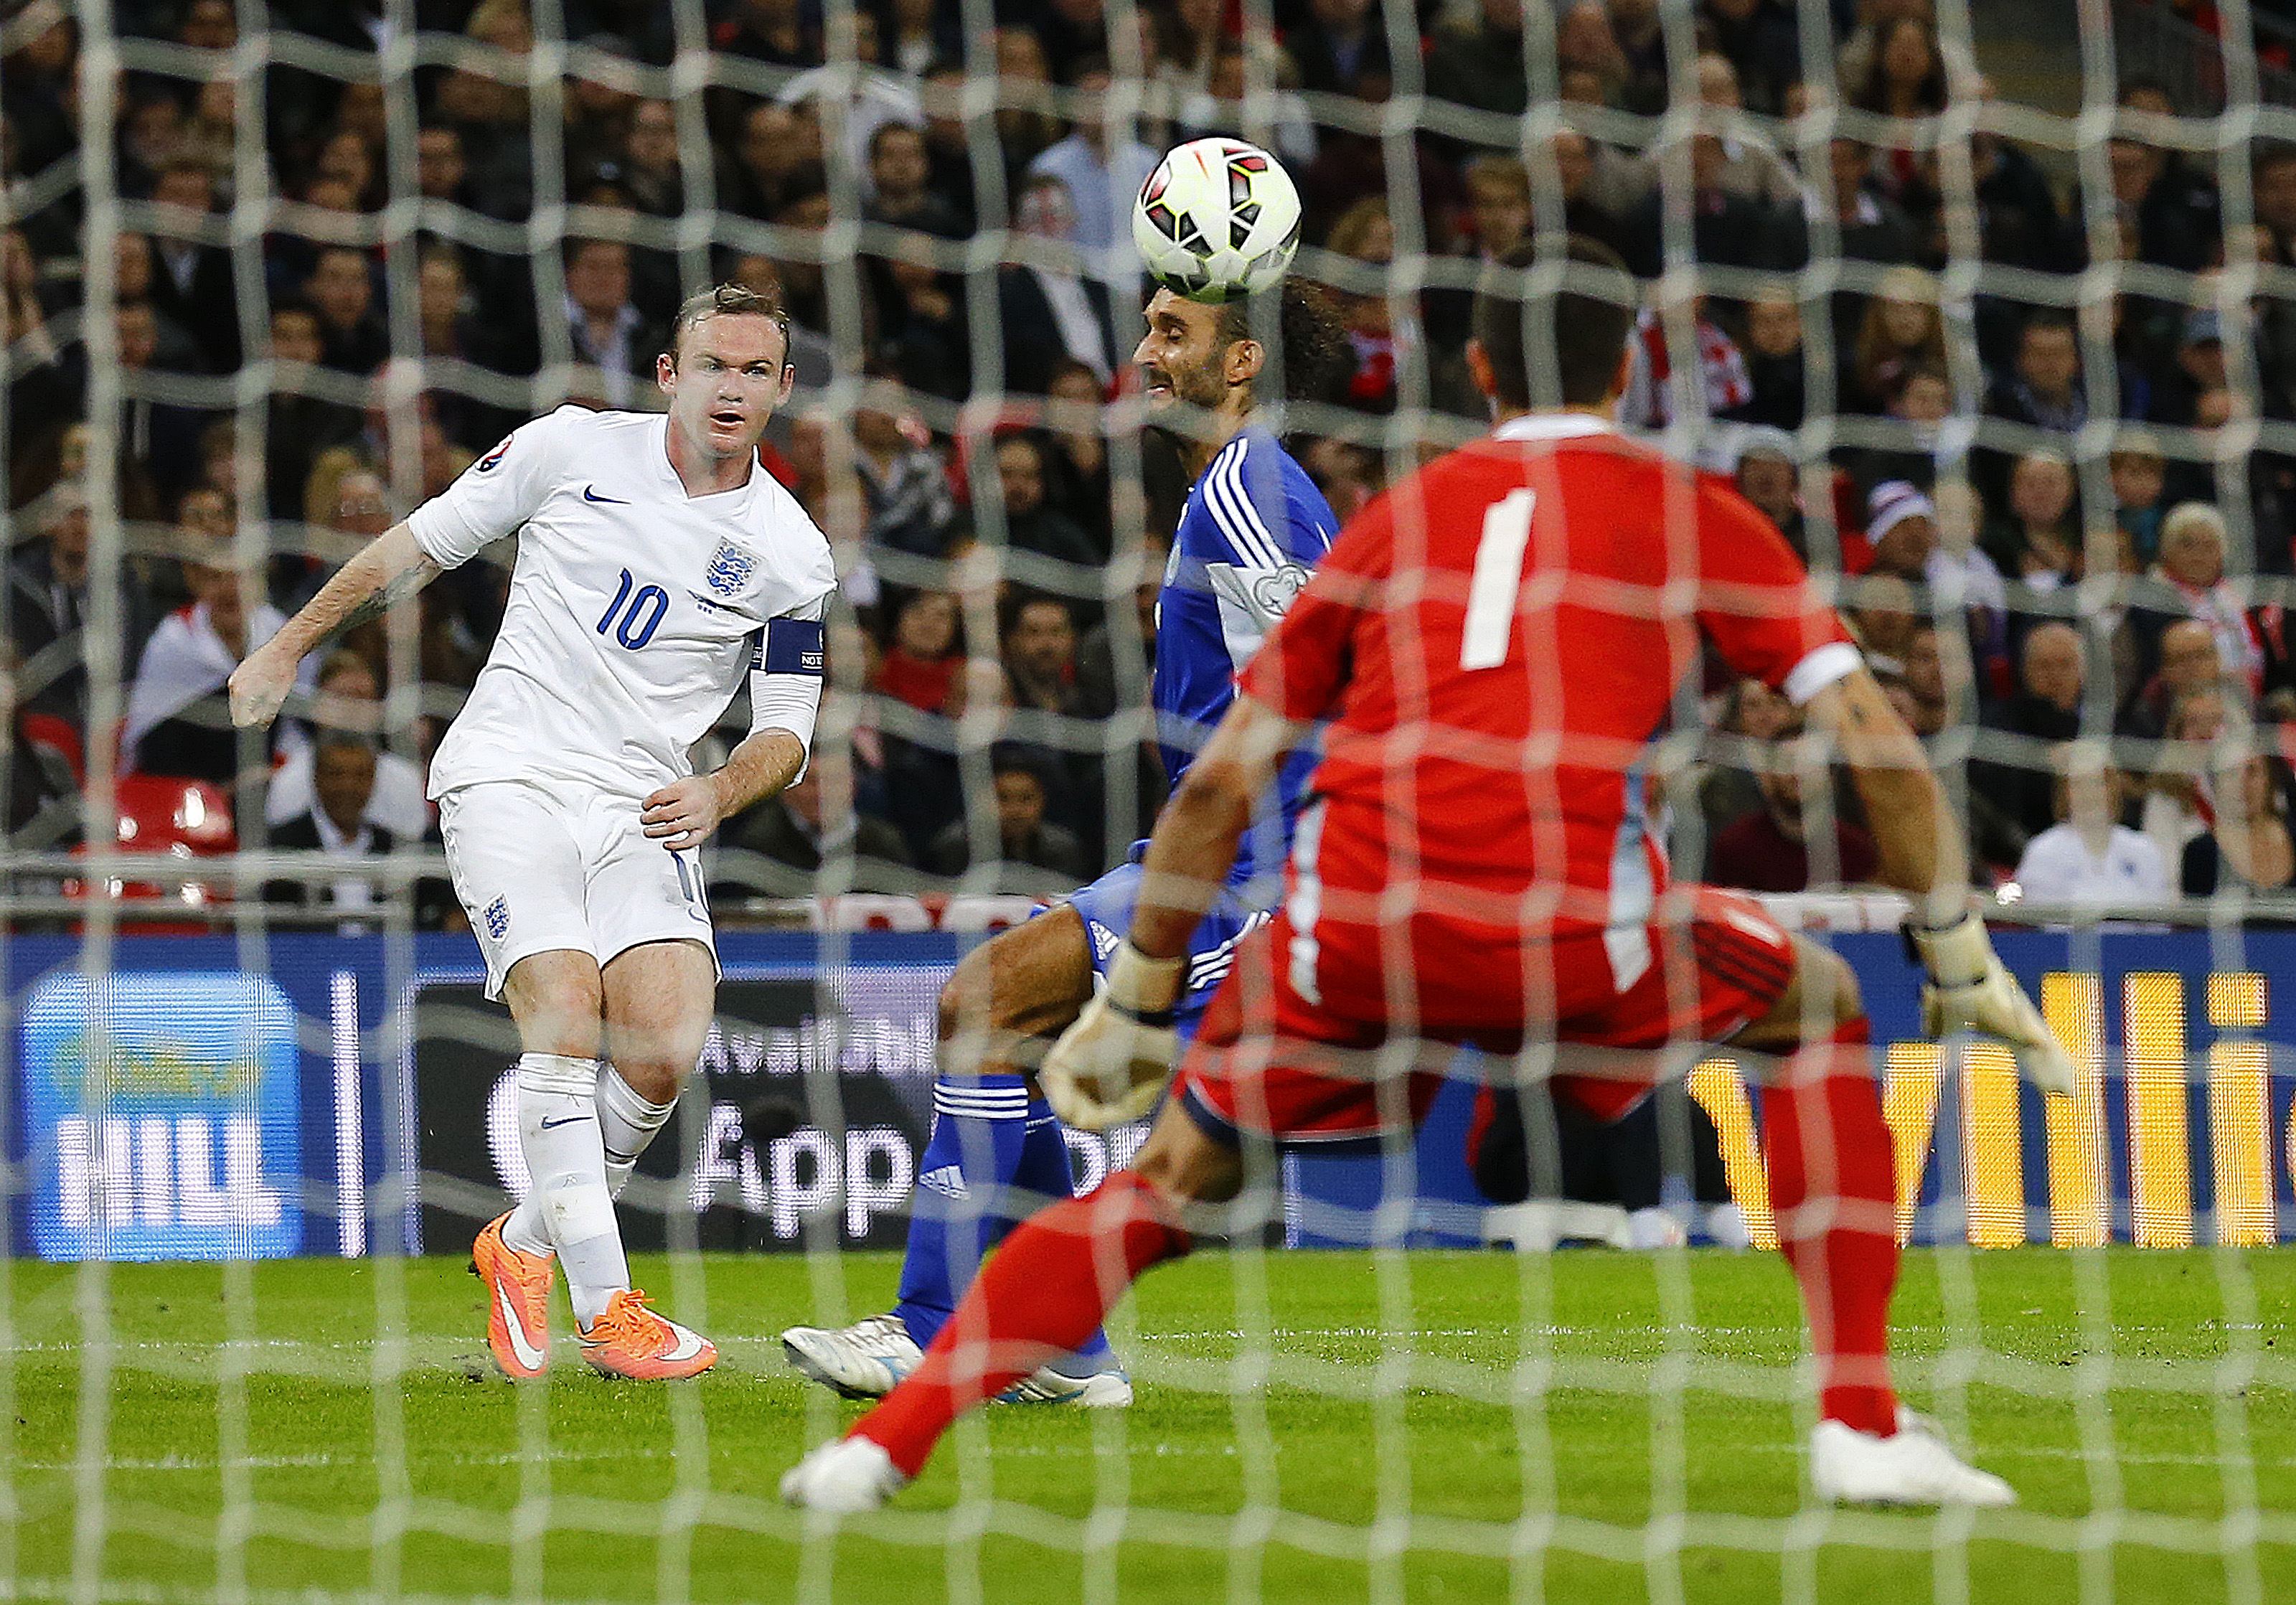 England made to work hard in 5-0 win over San Marino